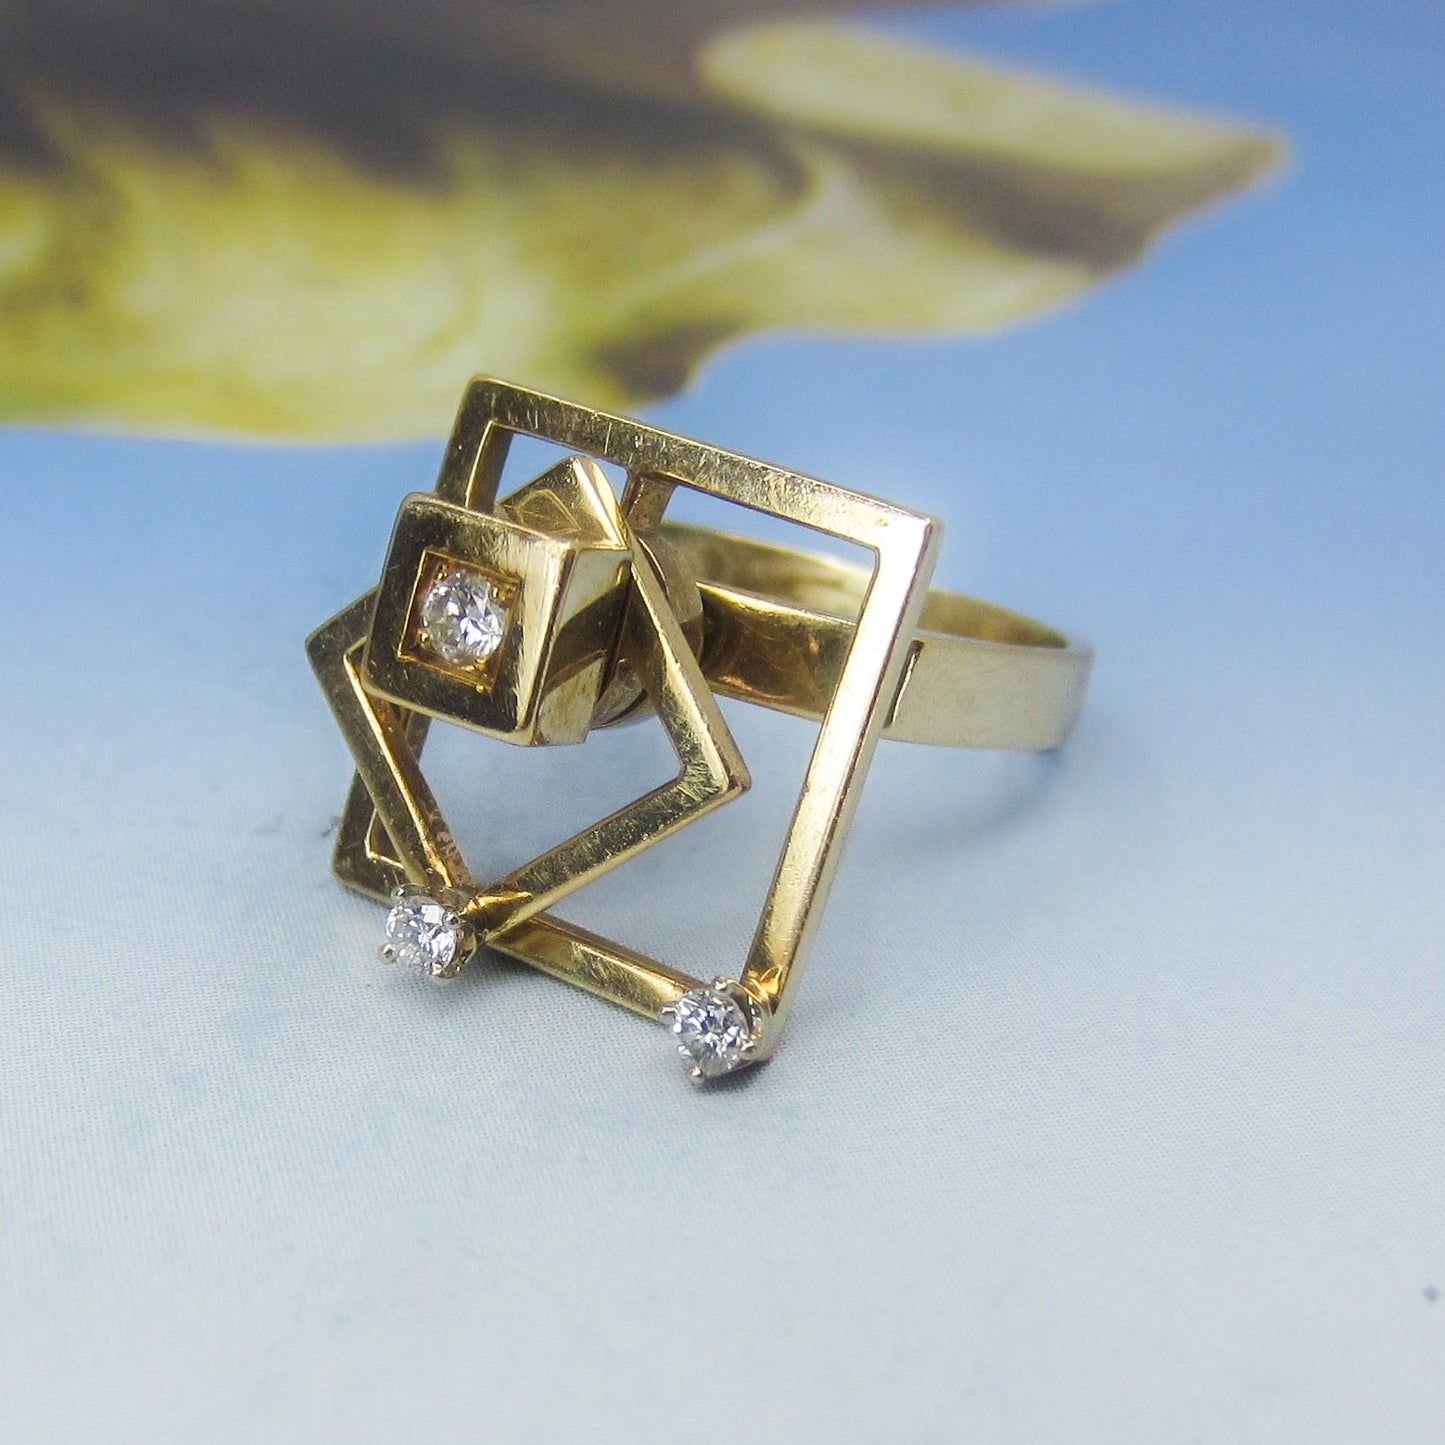 SOLD--Modernist Diamond Spinner Ring 14k by Teufel, 1975 size 6.75